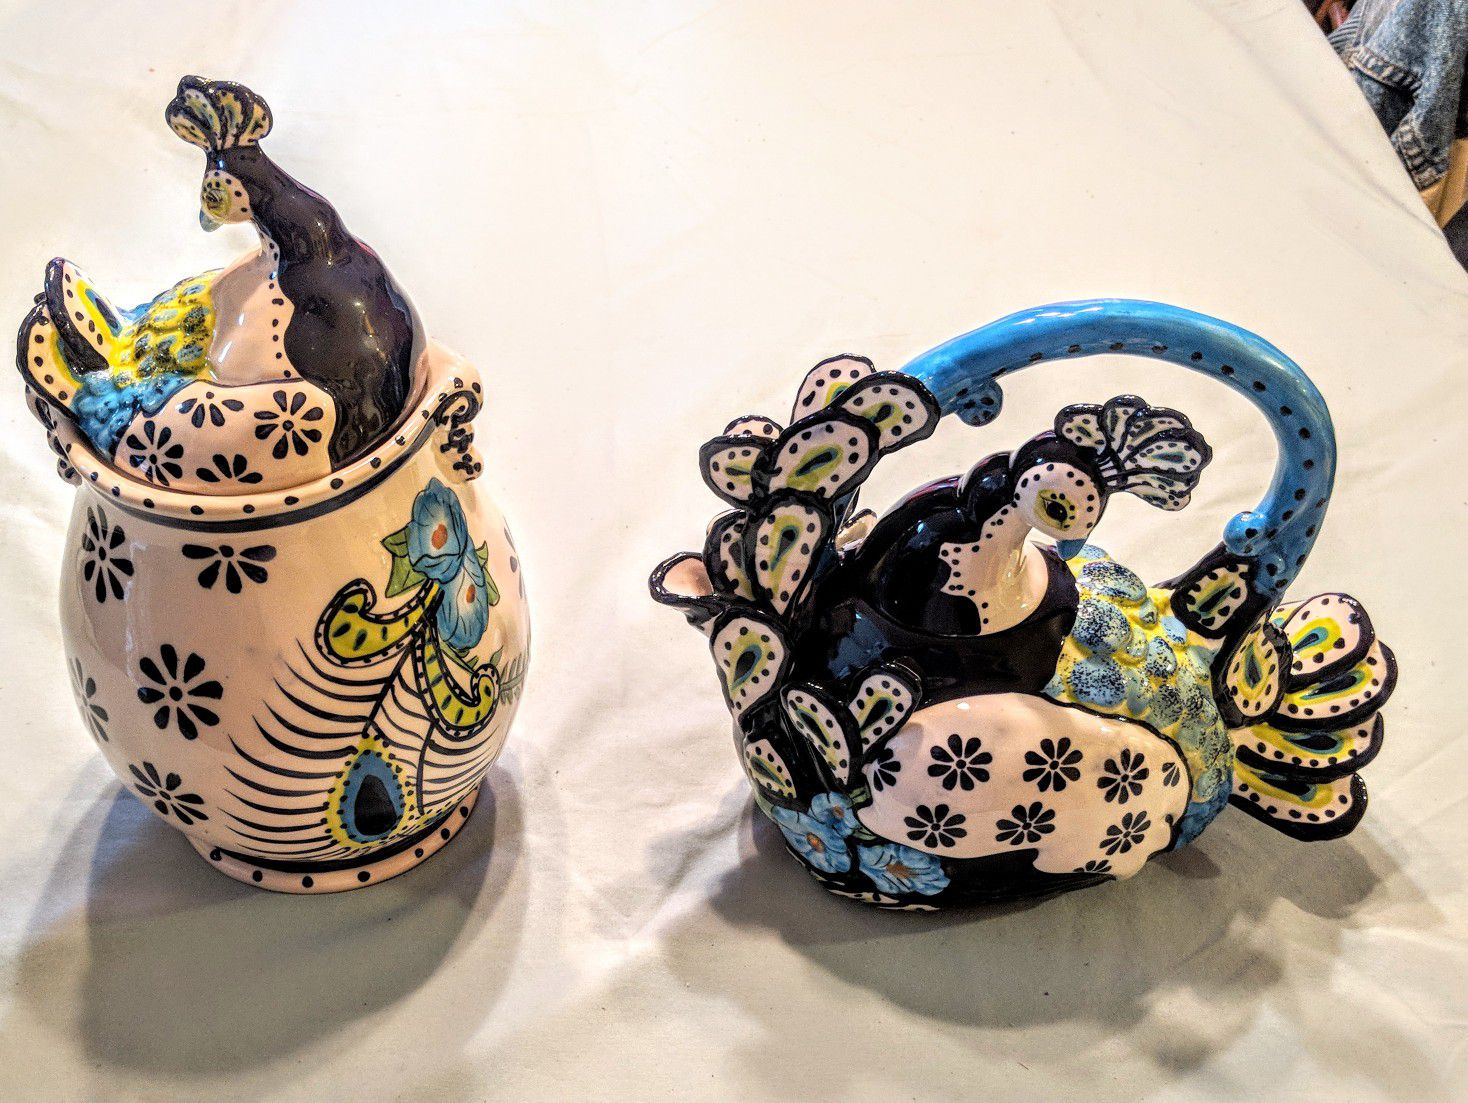 Peacock tea kettle and cookie jar